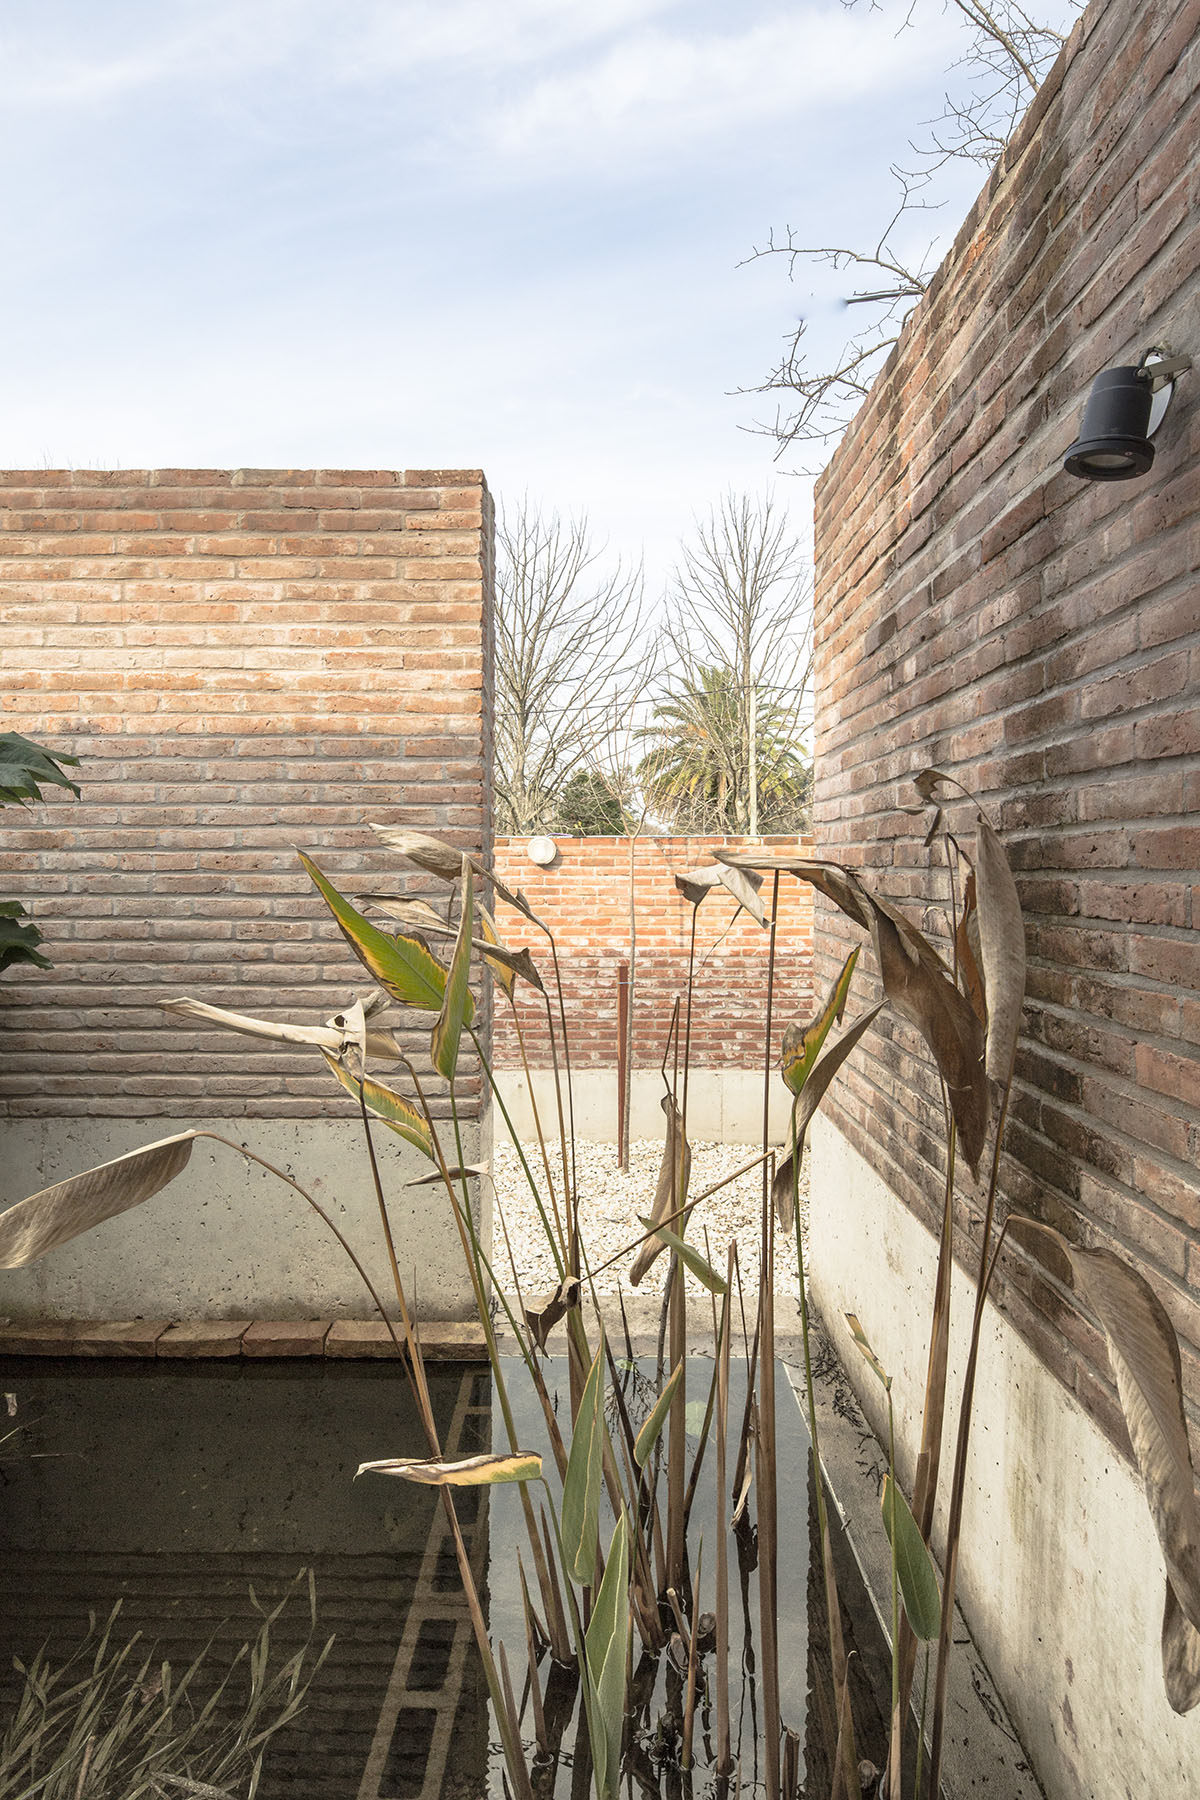 Casa Rodney | BAAG – Buenos Aires Arquitectura Grupal